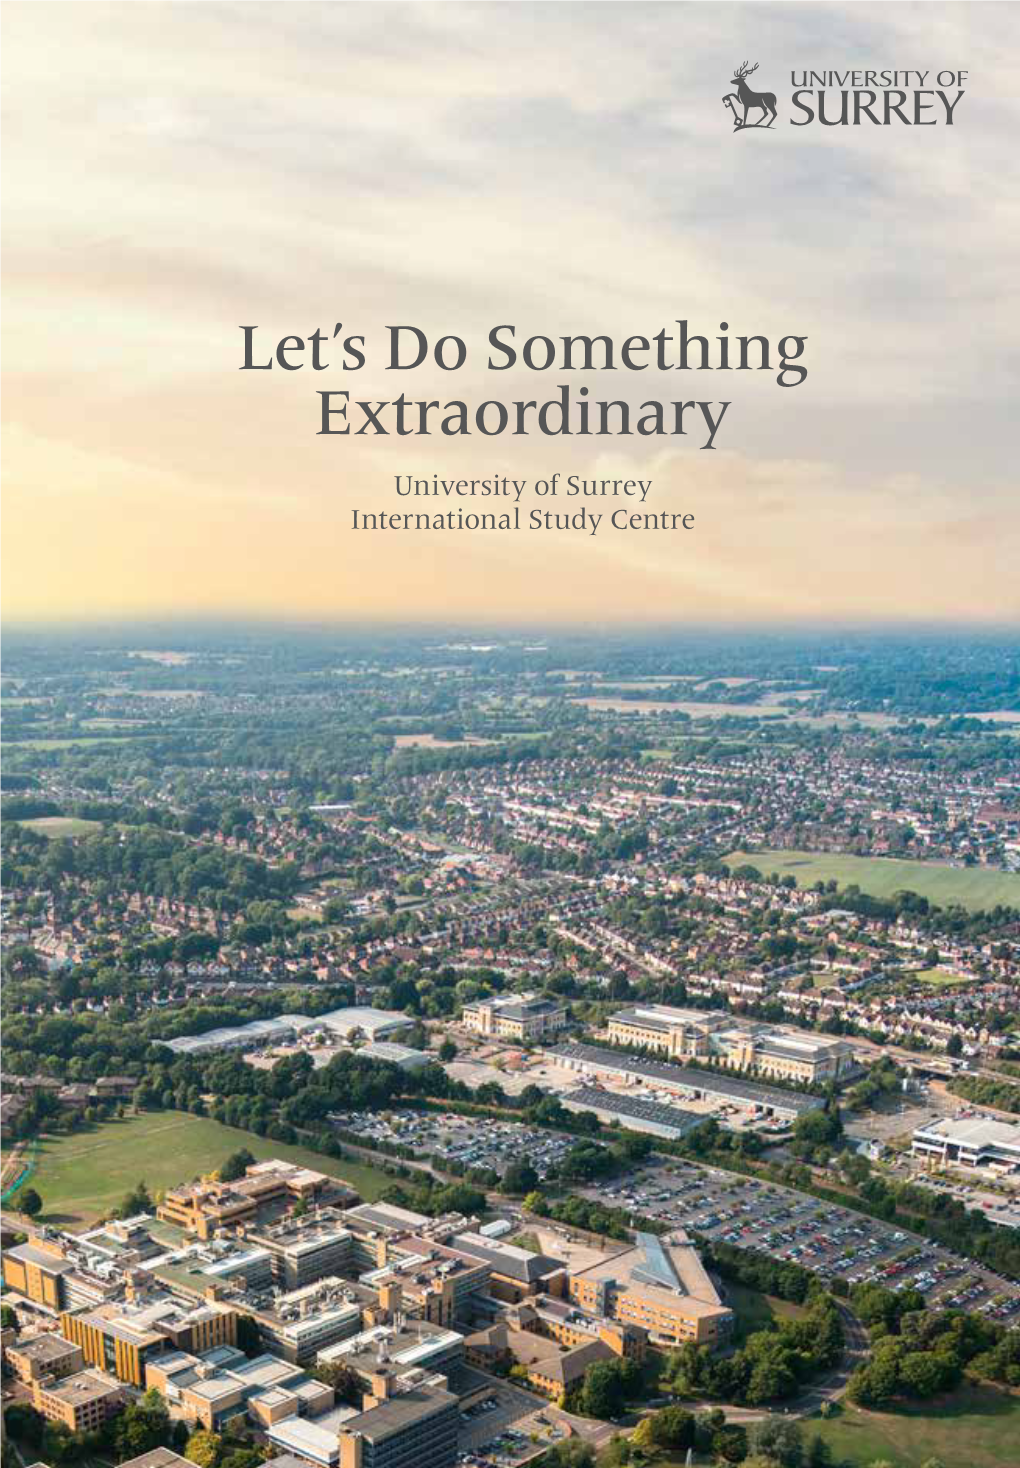 Let's Do Something Extraordinary